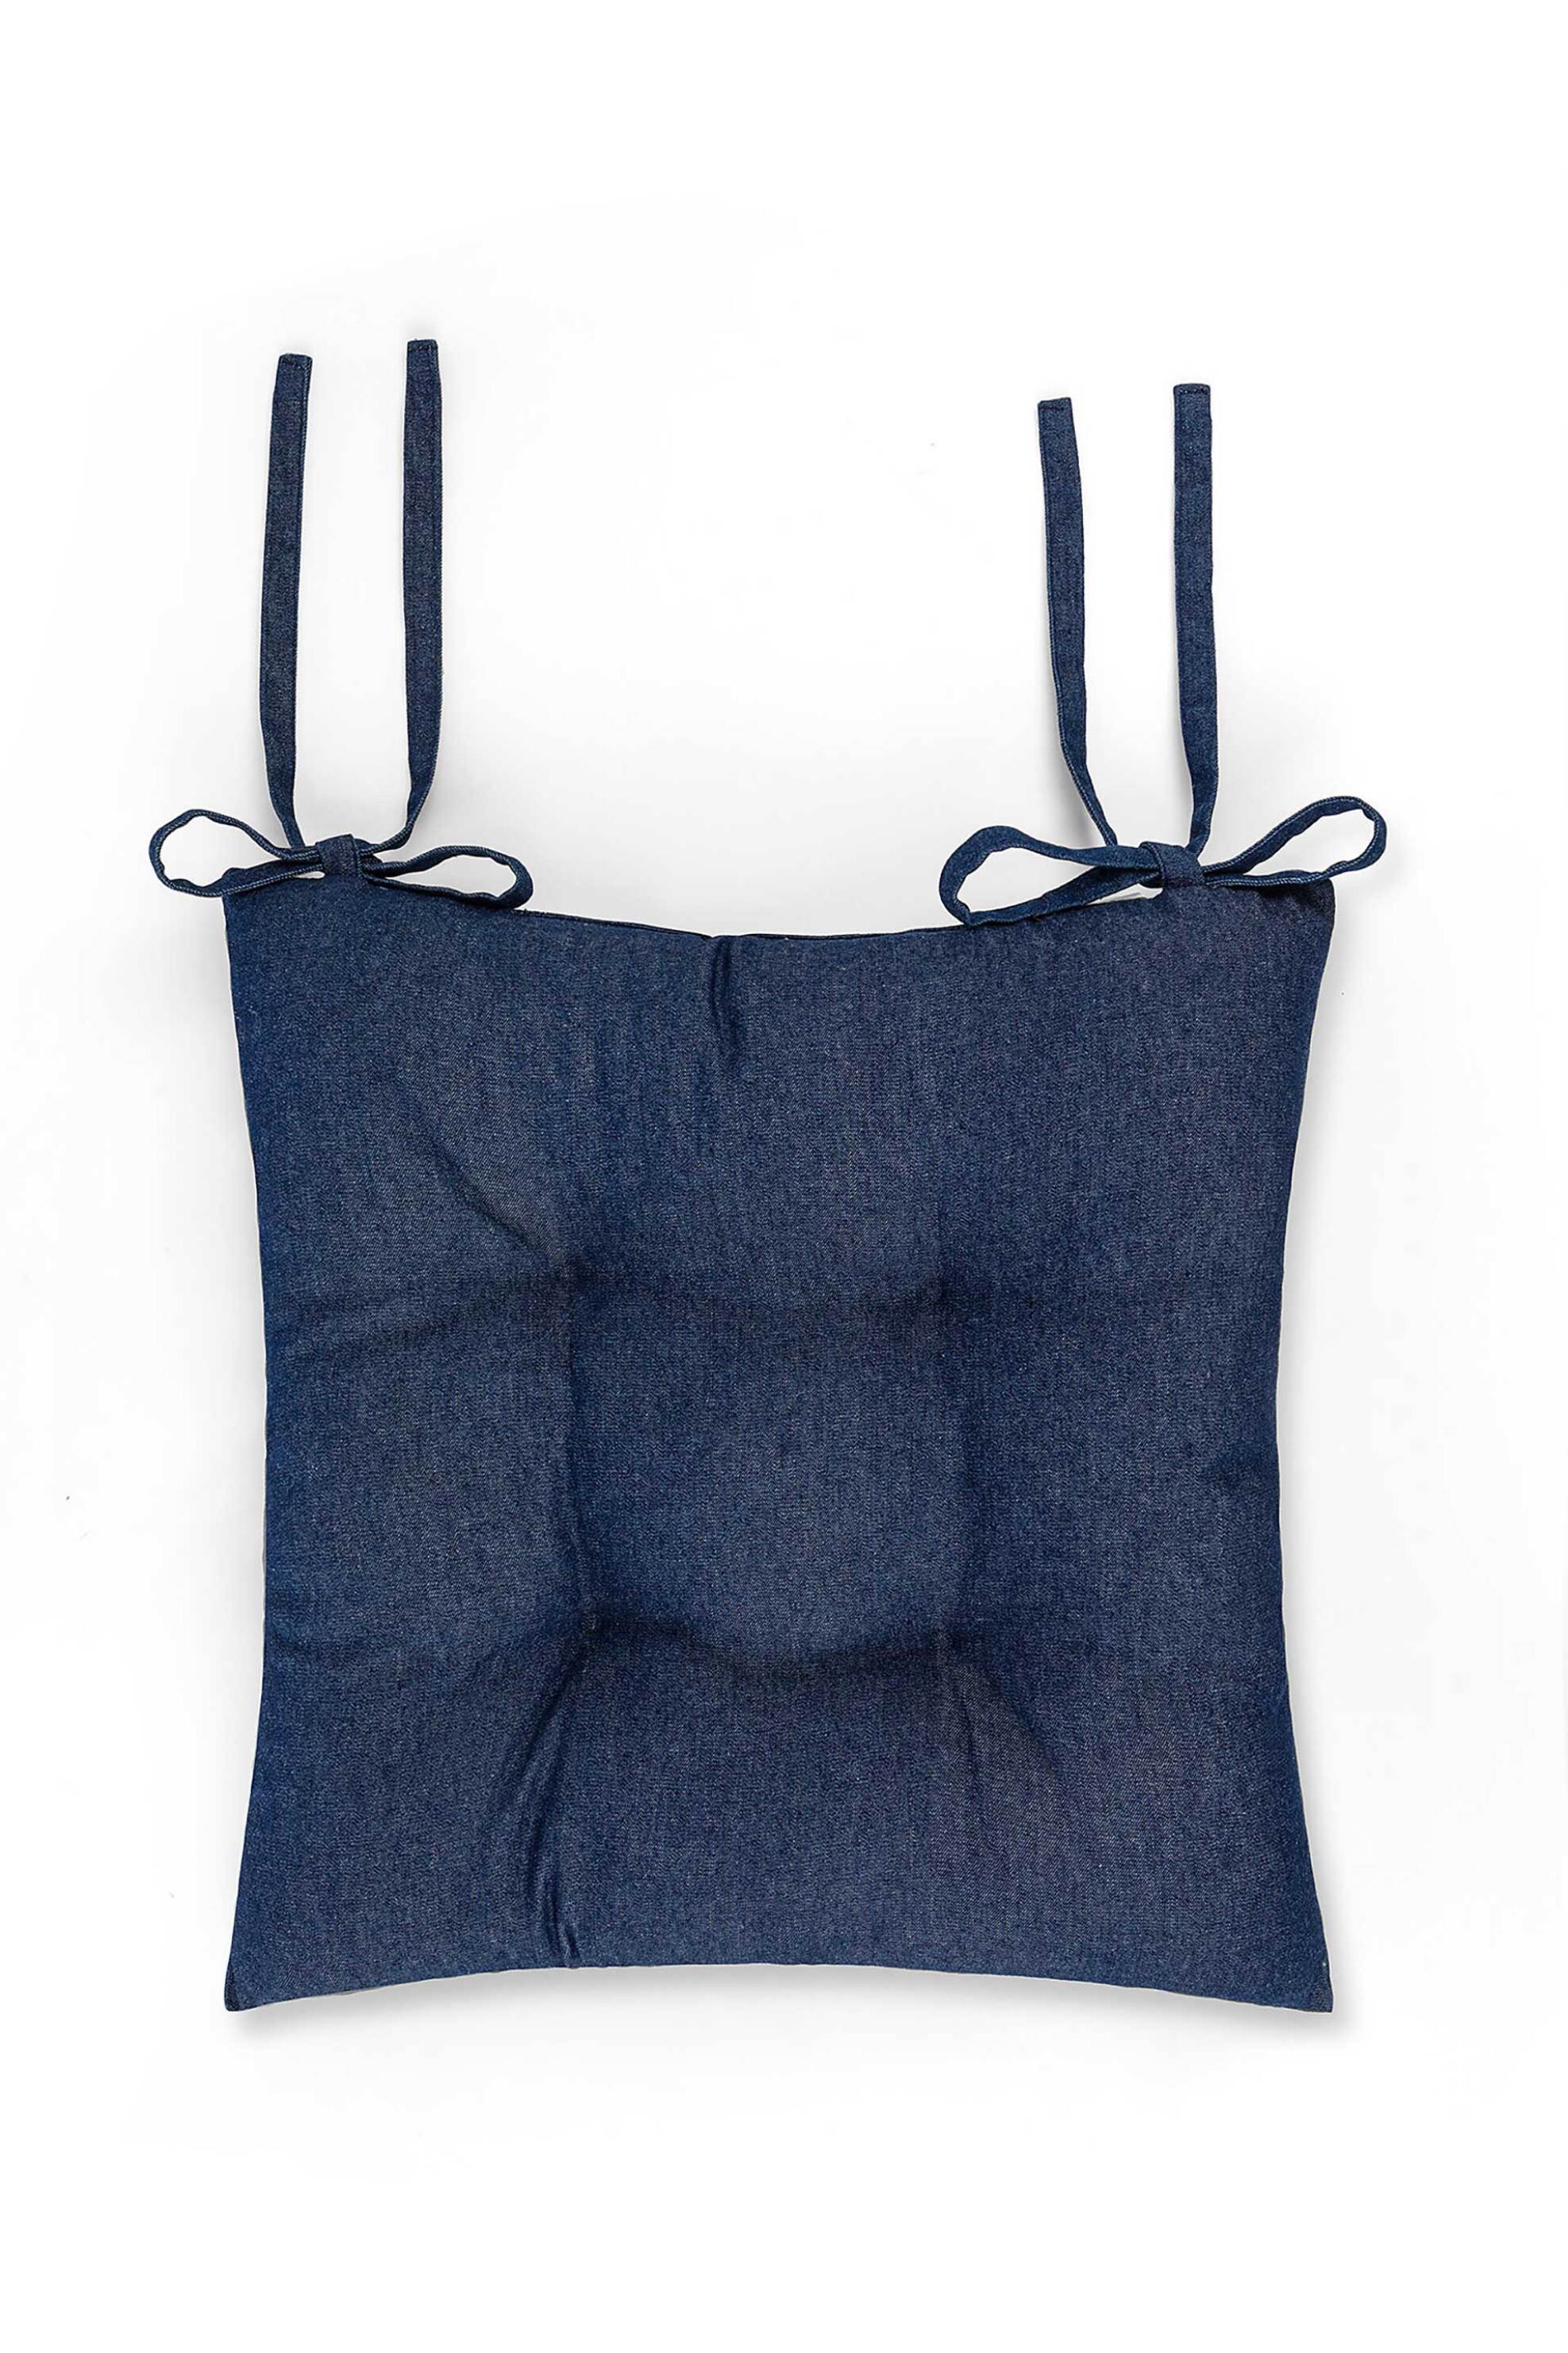 Home > ΔΙΑΚΟΣΜΗΣΗ > Διακοσμητικά Μαξιλάρια Coincasa denim μαξιλάρι καρέκλας μονόχρωμο 40 x 40 cm - 007358129 Denim Blue Σκούρο